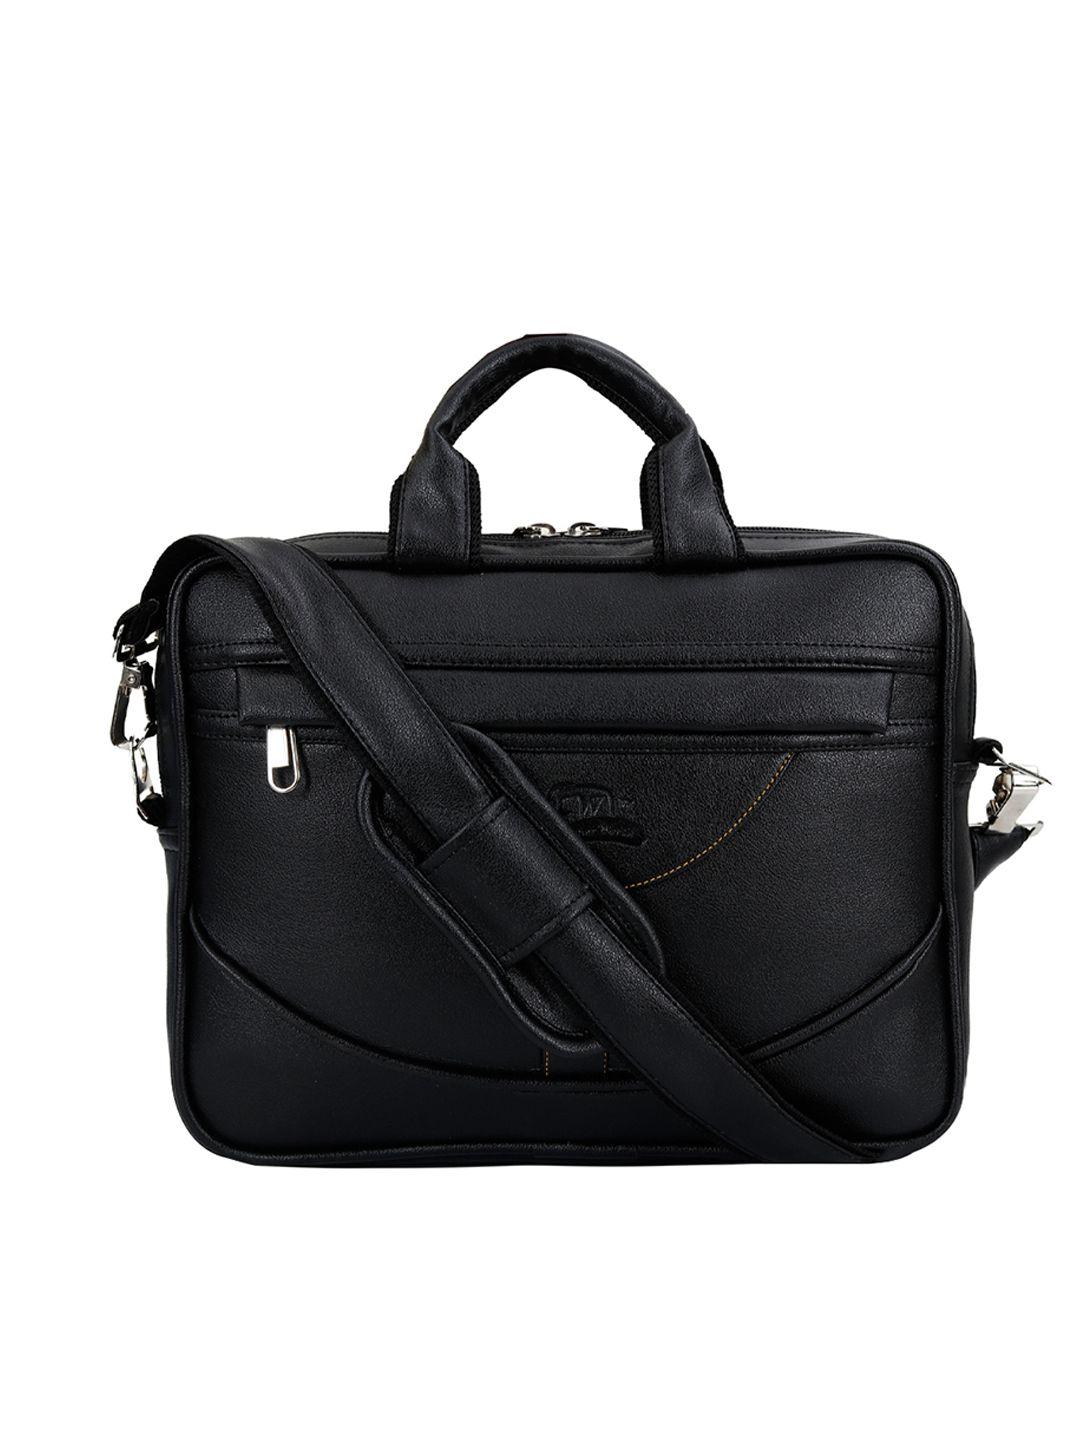 leather world unisex black solid laptop bag